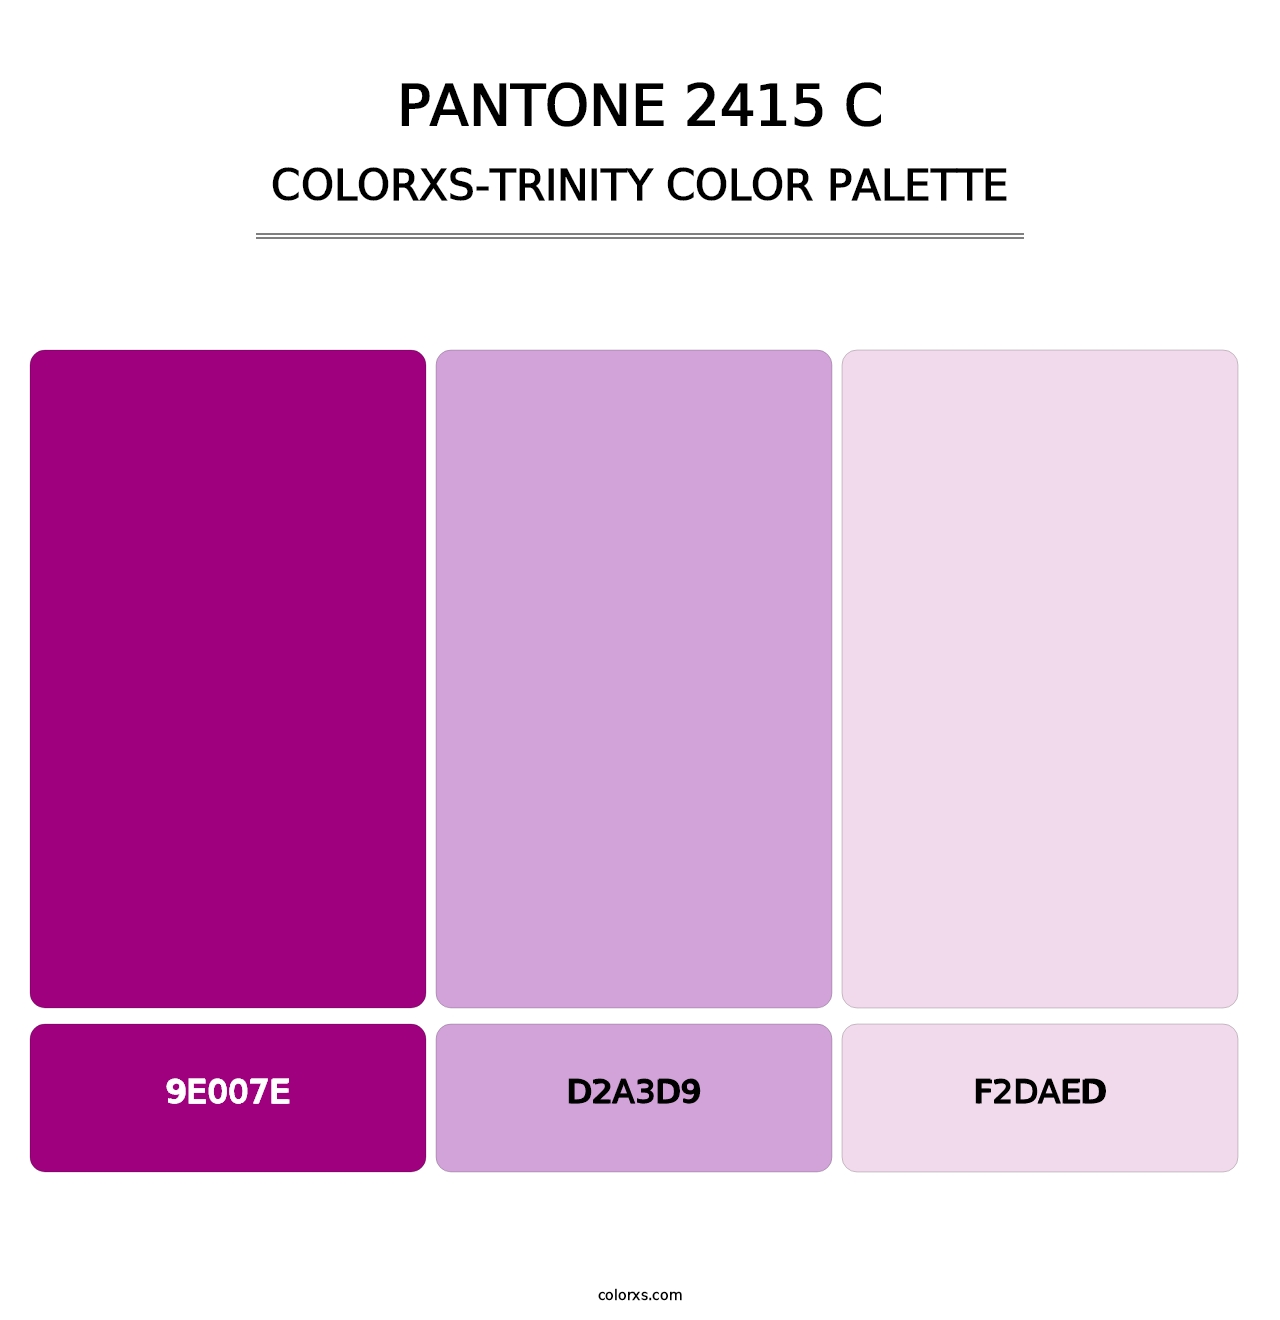 PANTONE 2415 C - Colorxs Trinity Palette